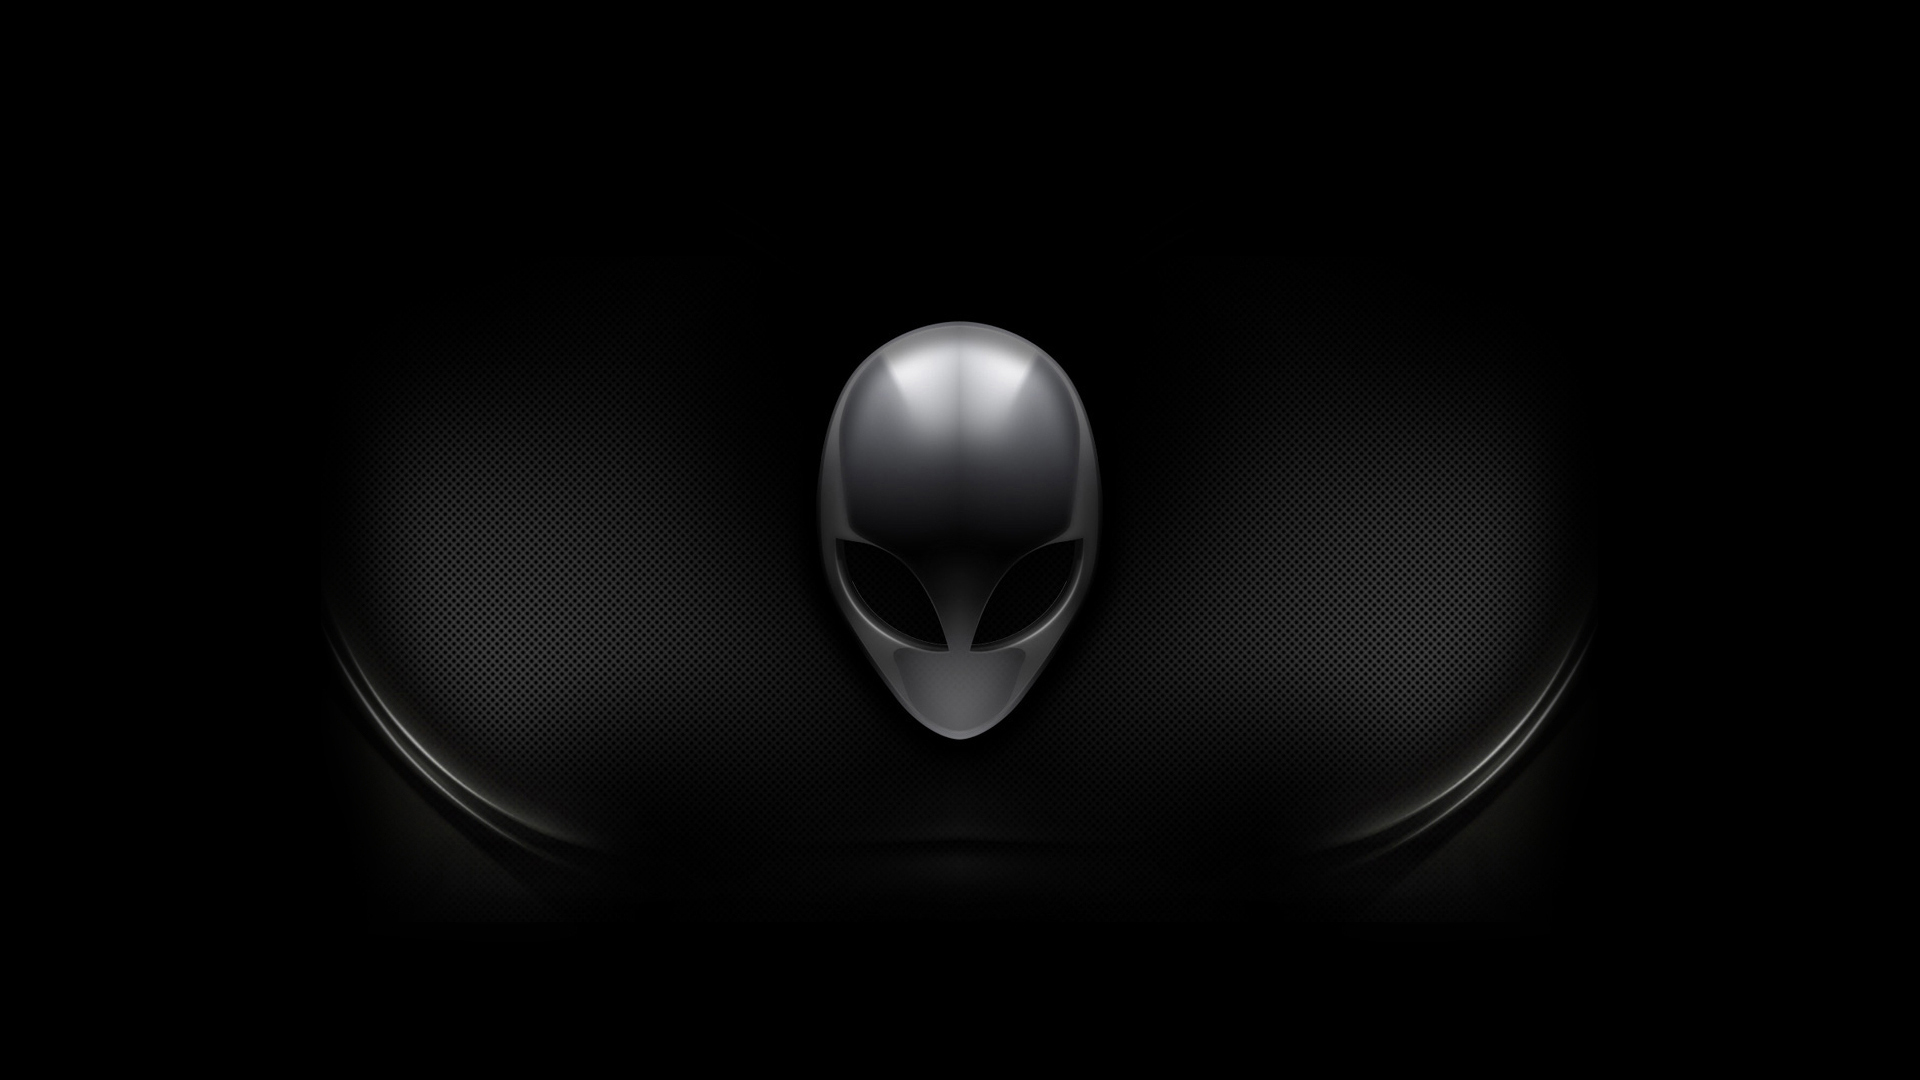 alienware dark logo hd 1920x1080 1080p wallpaper compatible for